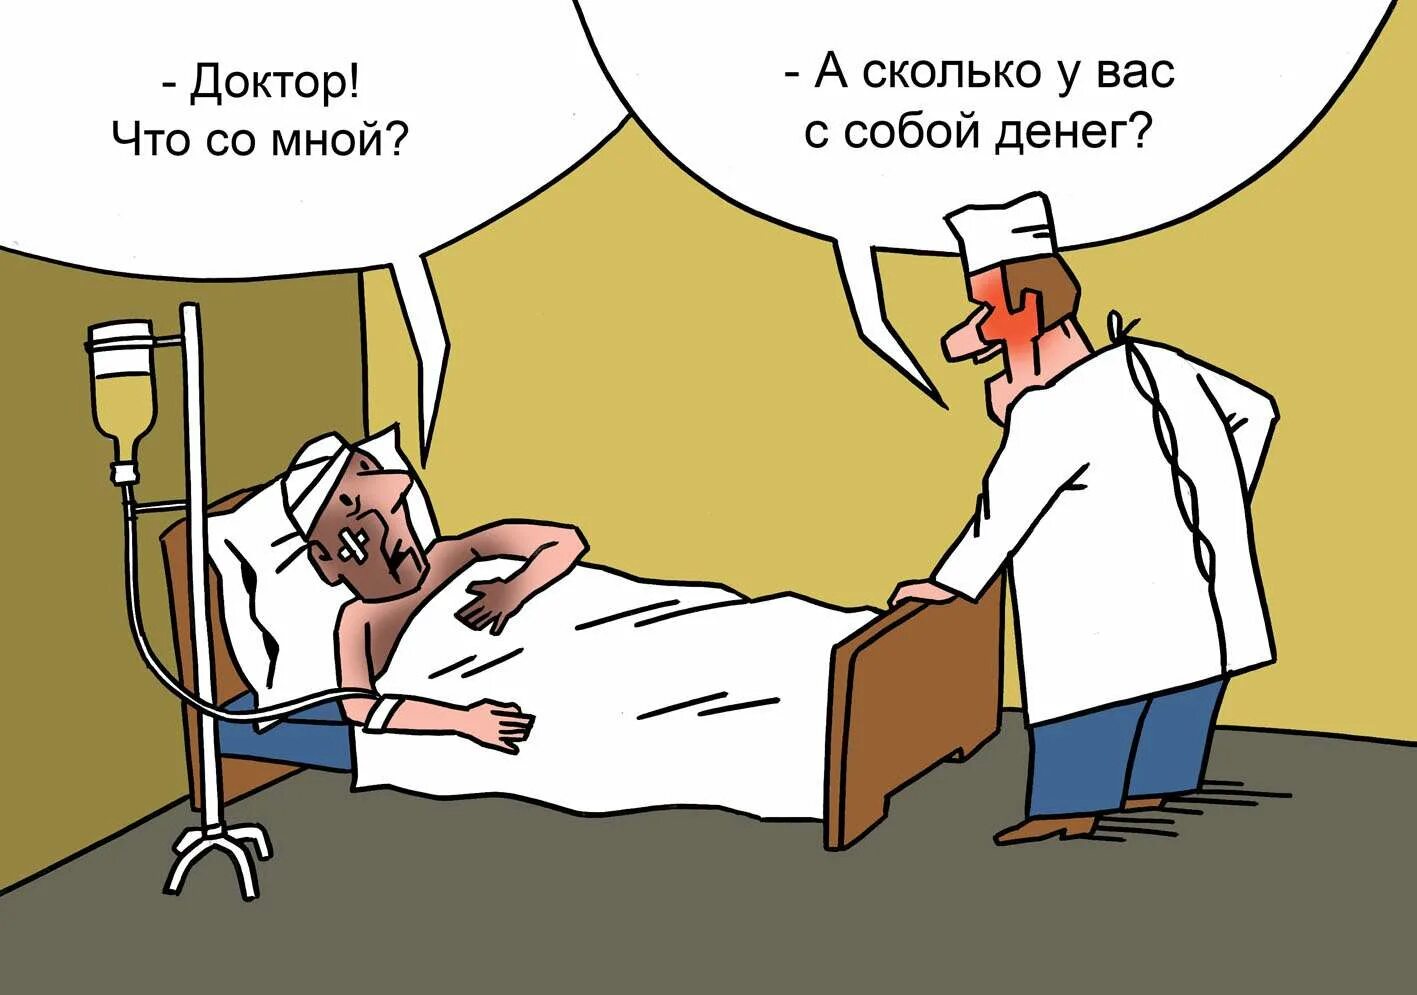 Врач карикатура. Платная медицина карикатура. Врач и пациент карикатура. Платная медицина прикол.